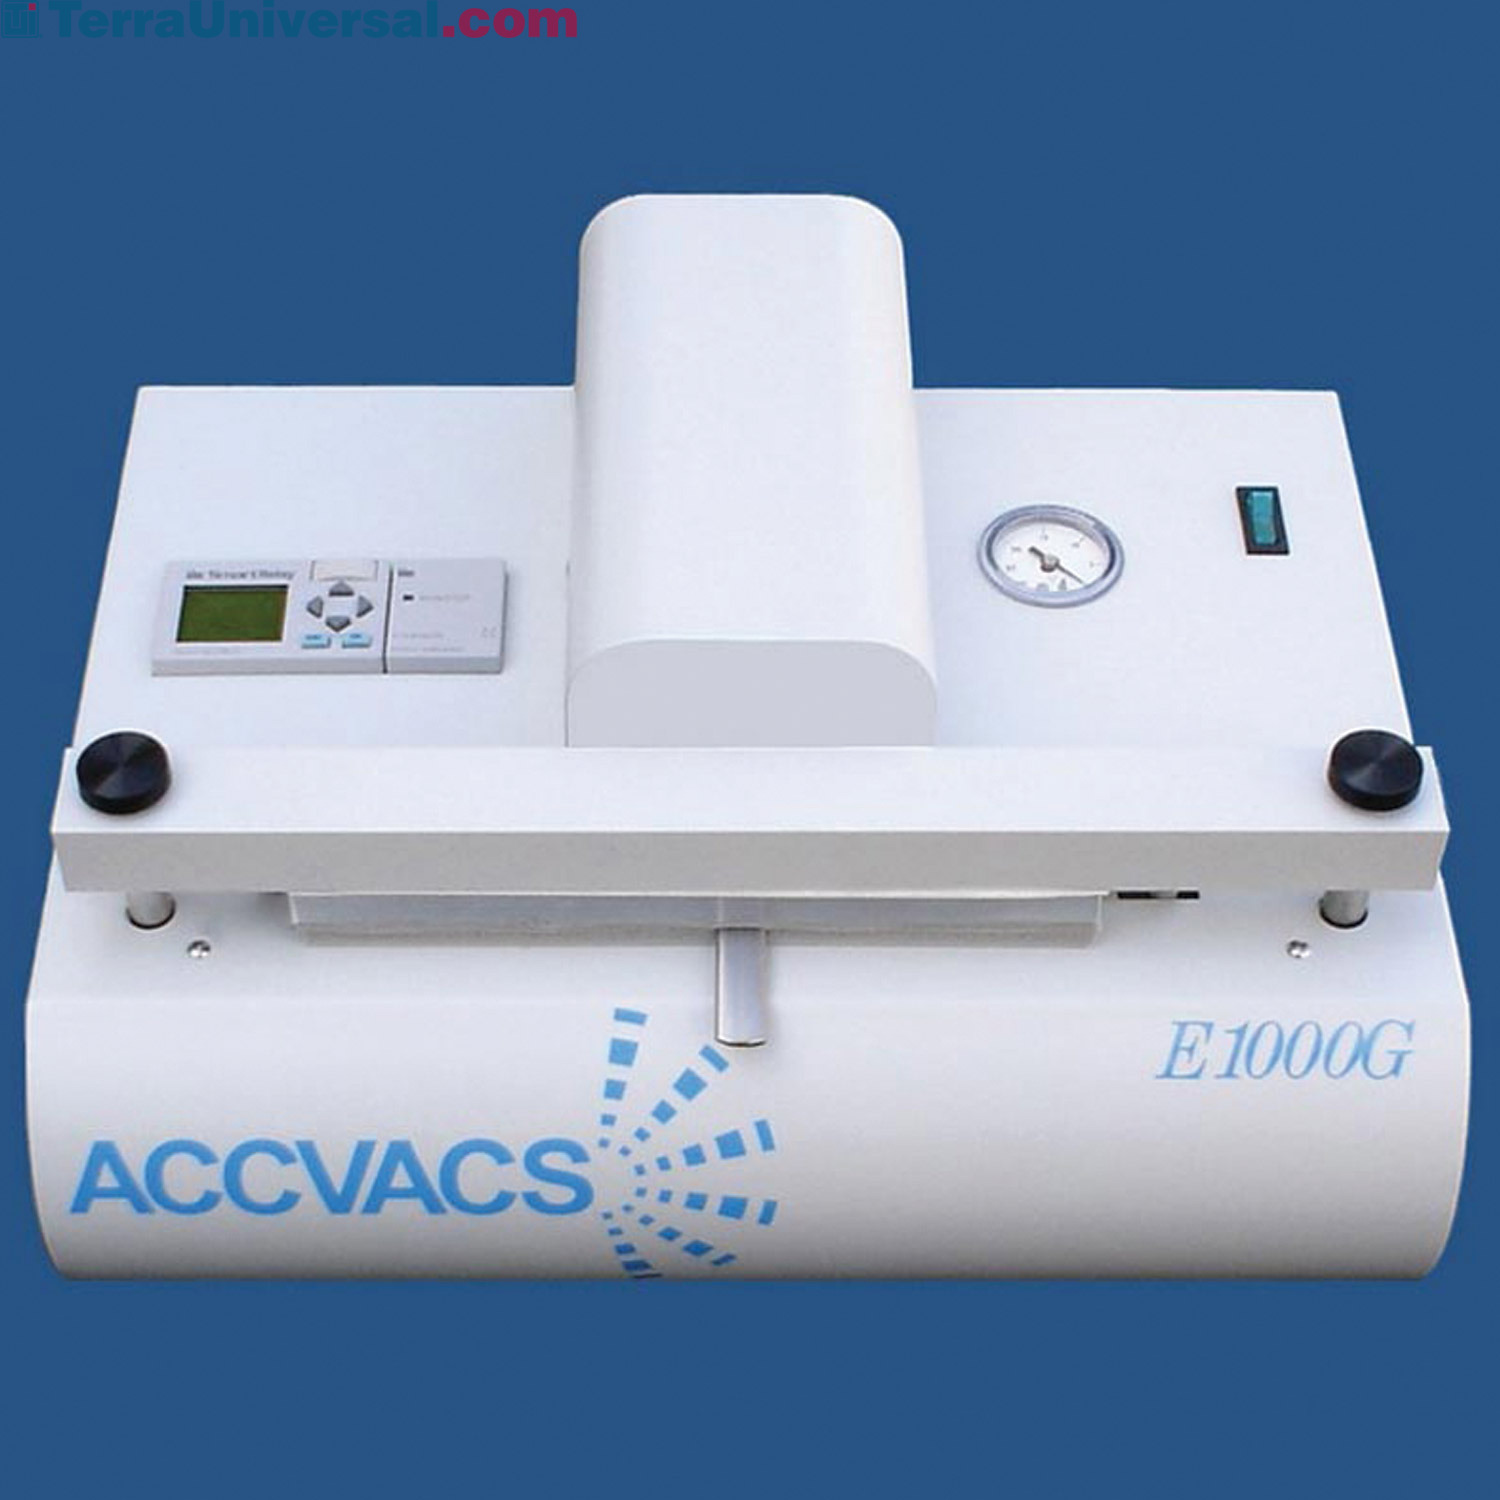 AVC Chamber Vacuum Sealer from AmeriVacS